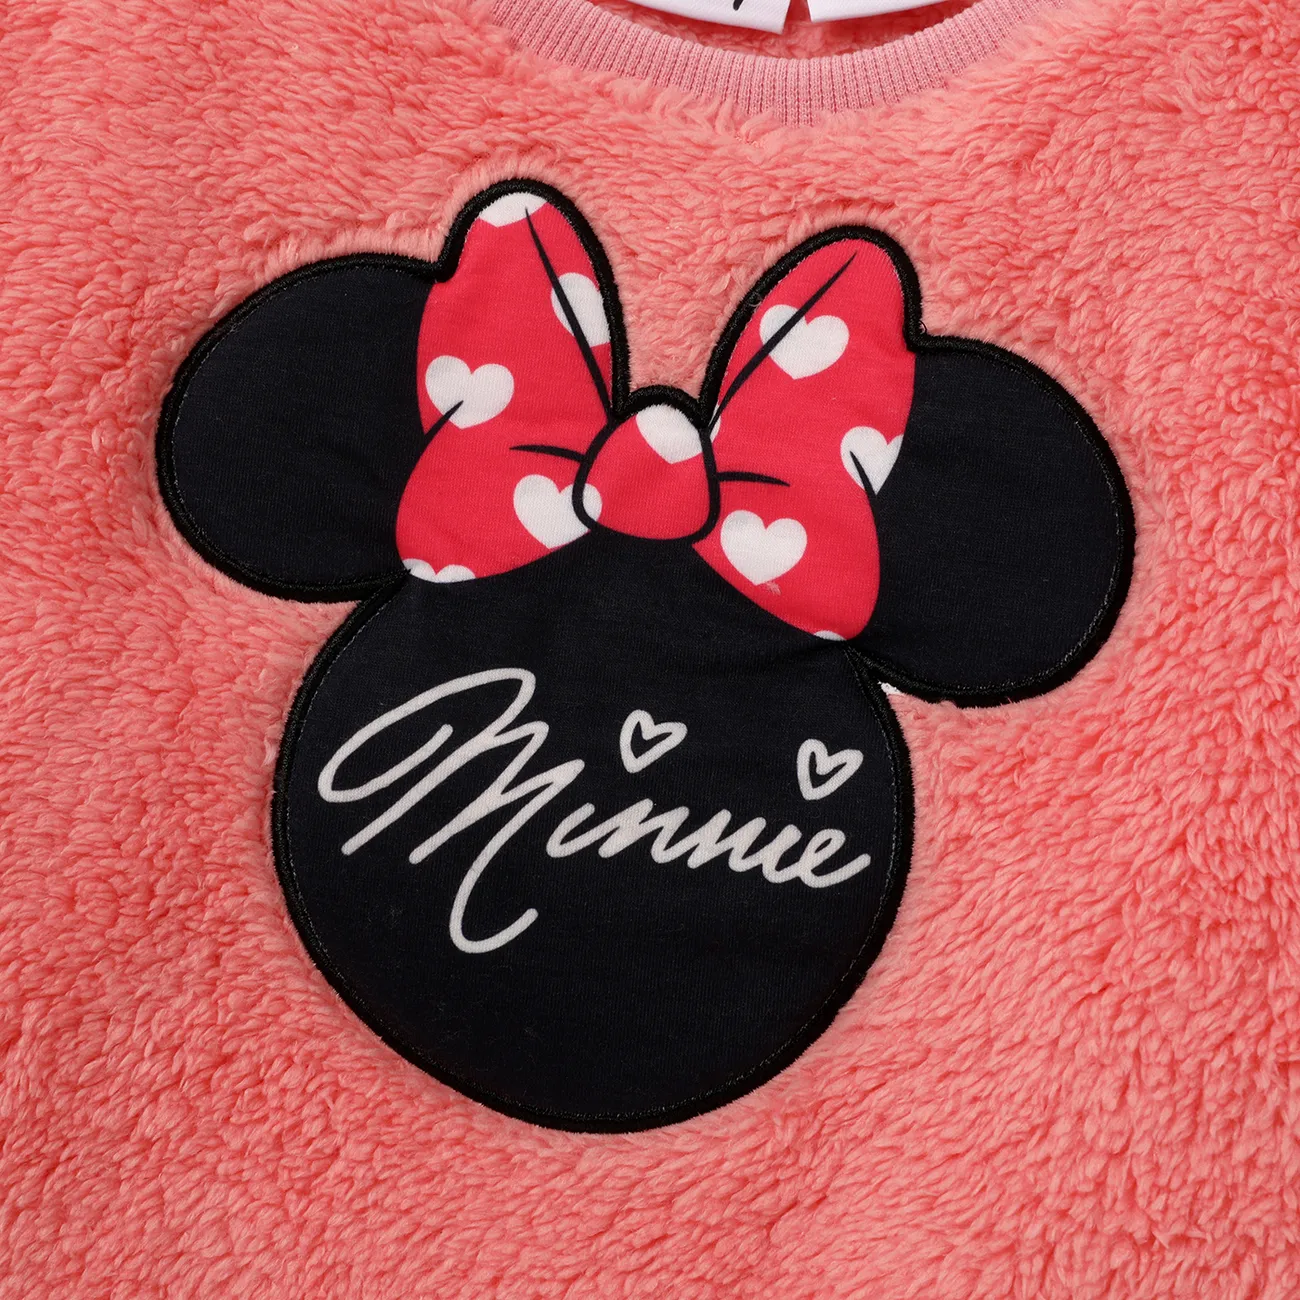 Disney Mickey and Friends Criança Menina Infantil Sweatshirt Rosa big image 1